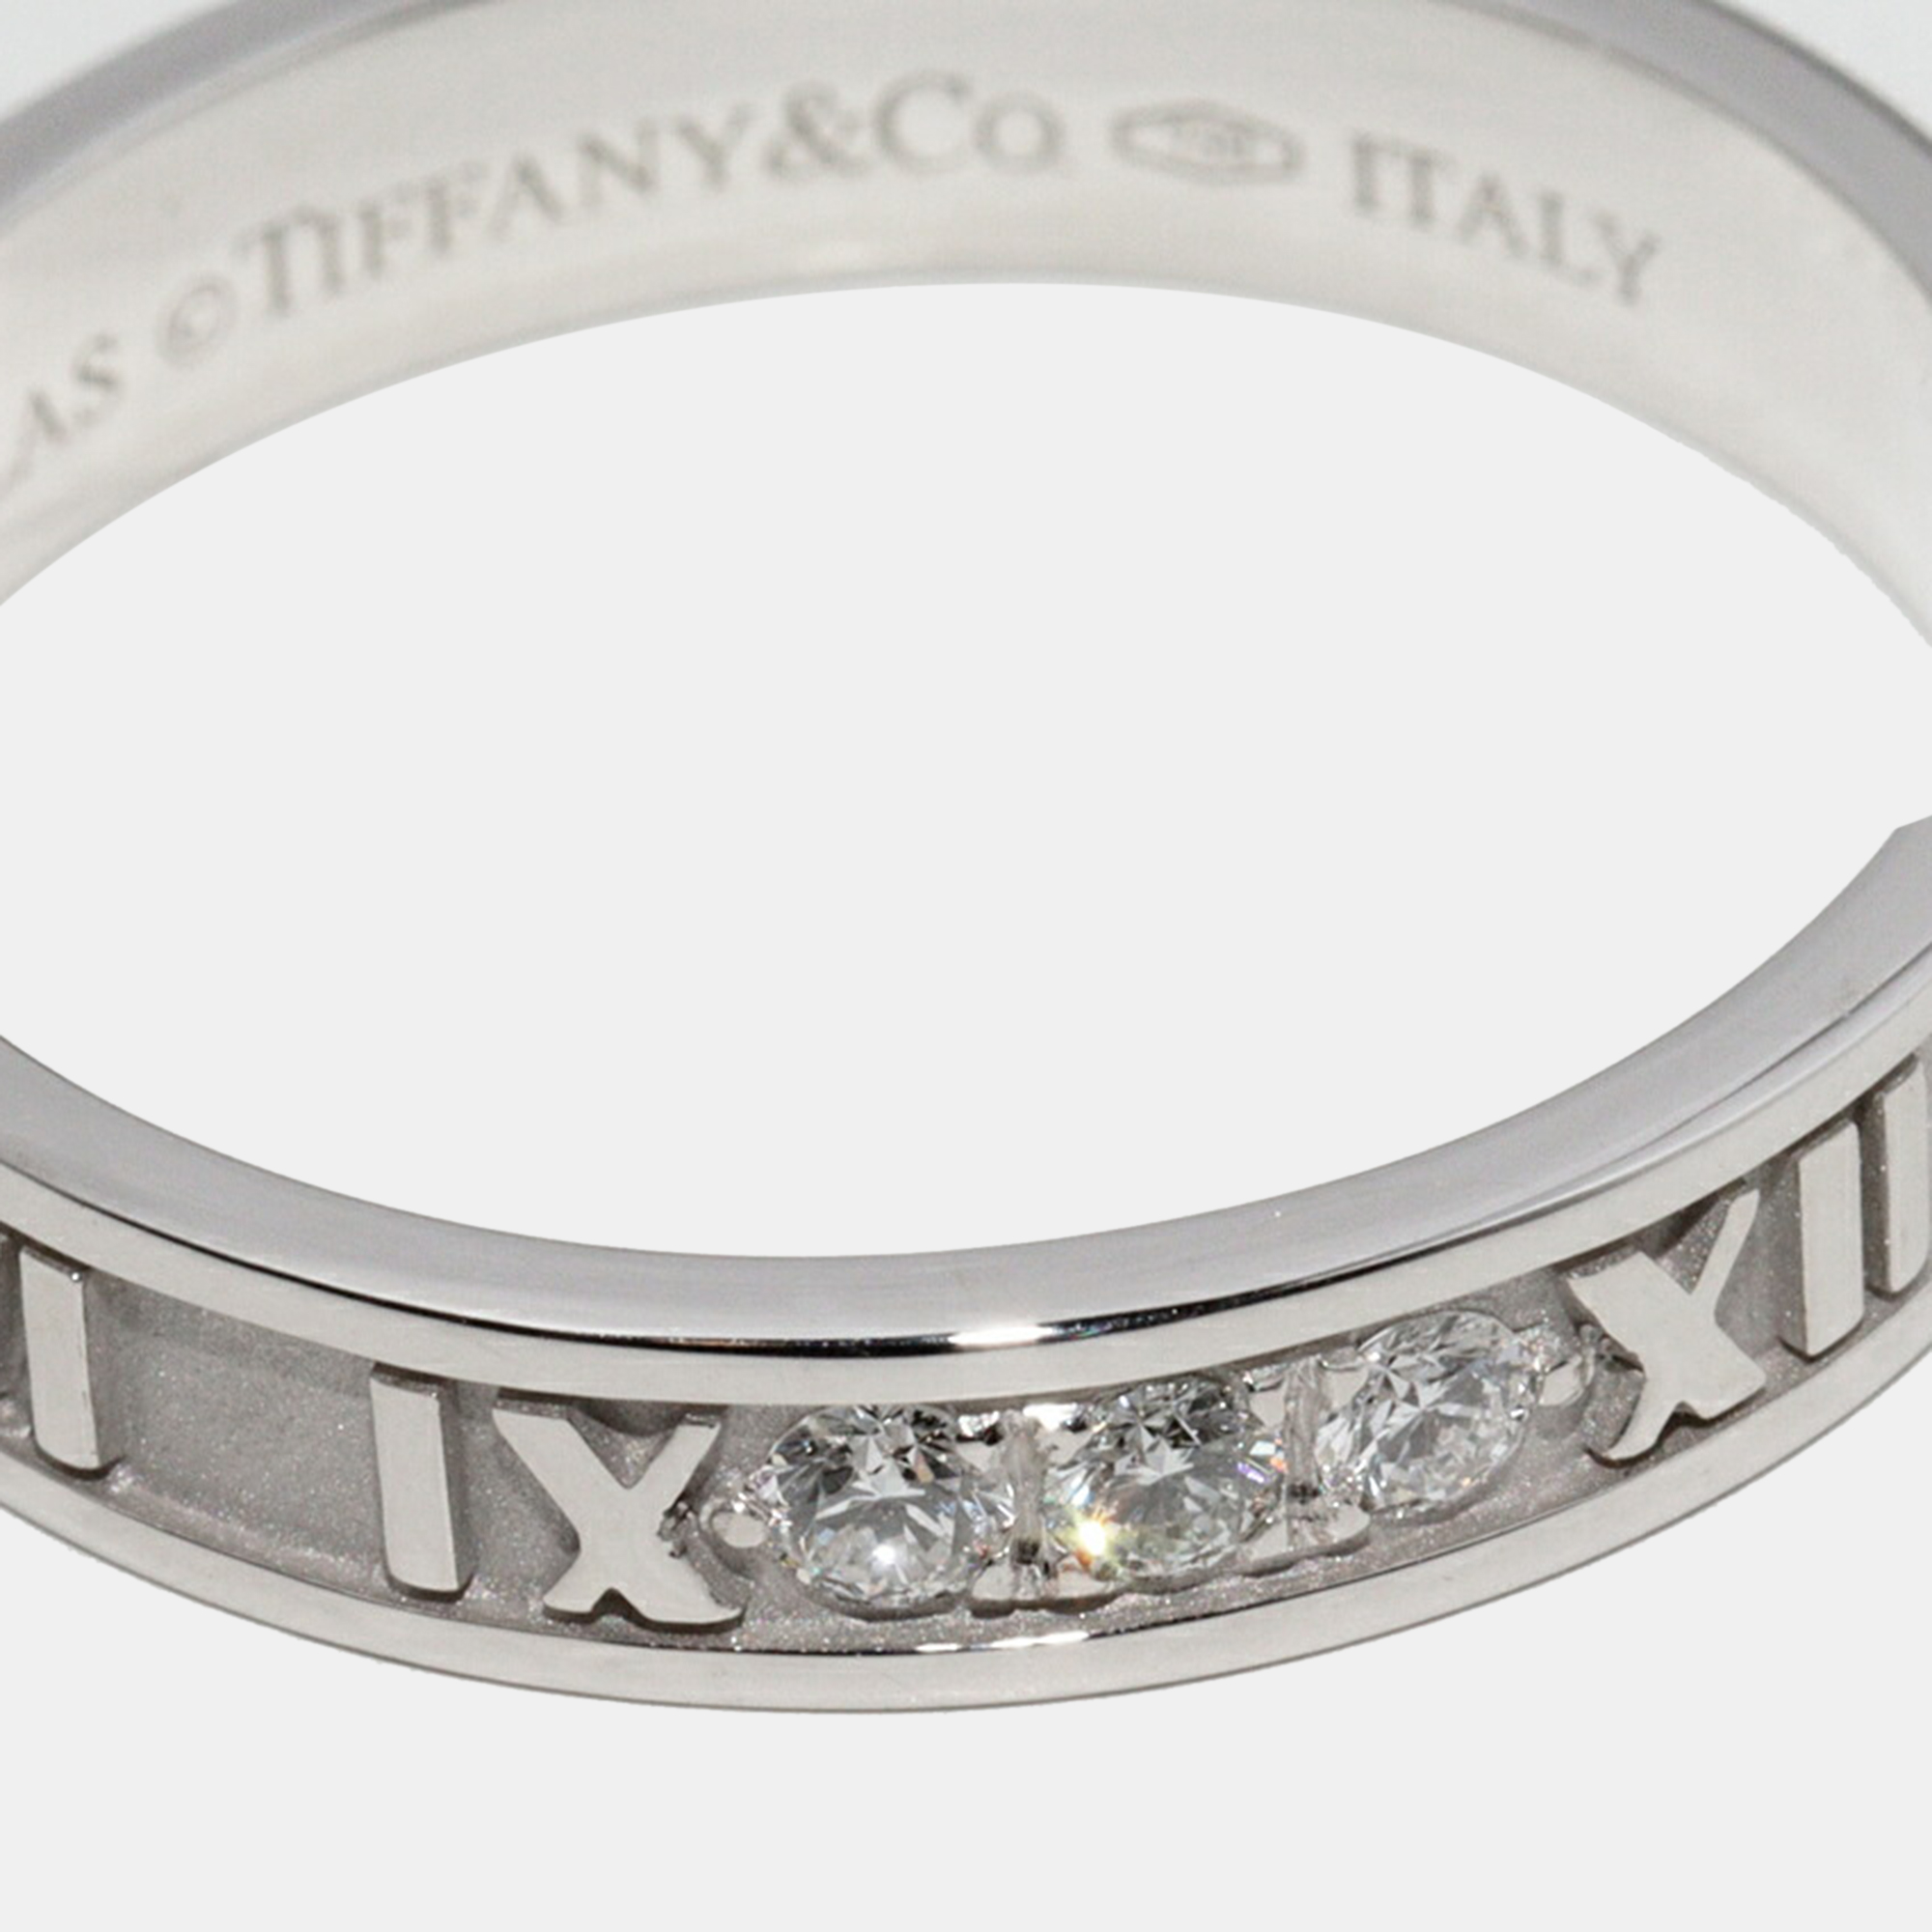 Tiffany & Co. Atlas 18K White Gold Diamond Ring EU 62